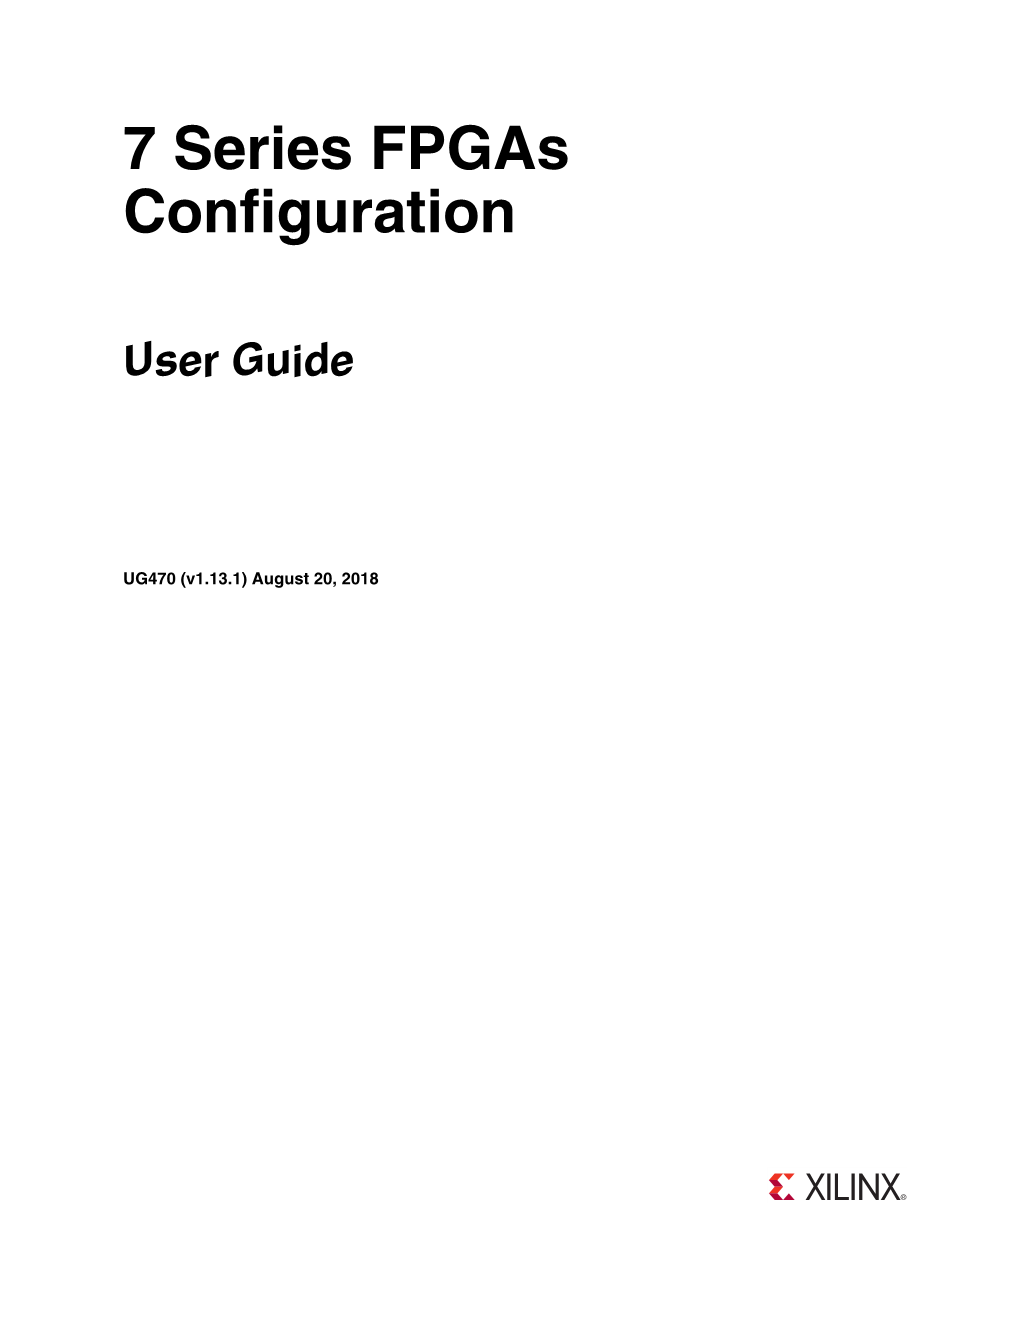 UG470 7 Series Fpgas Configuration User Guide